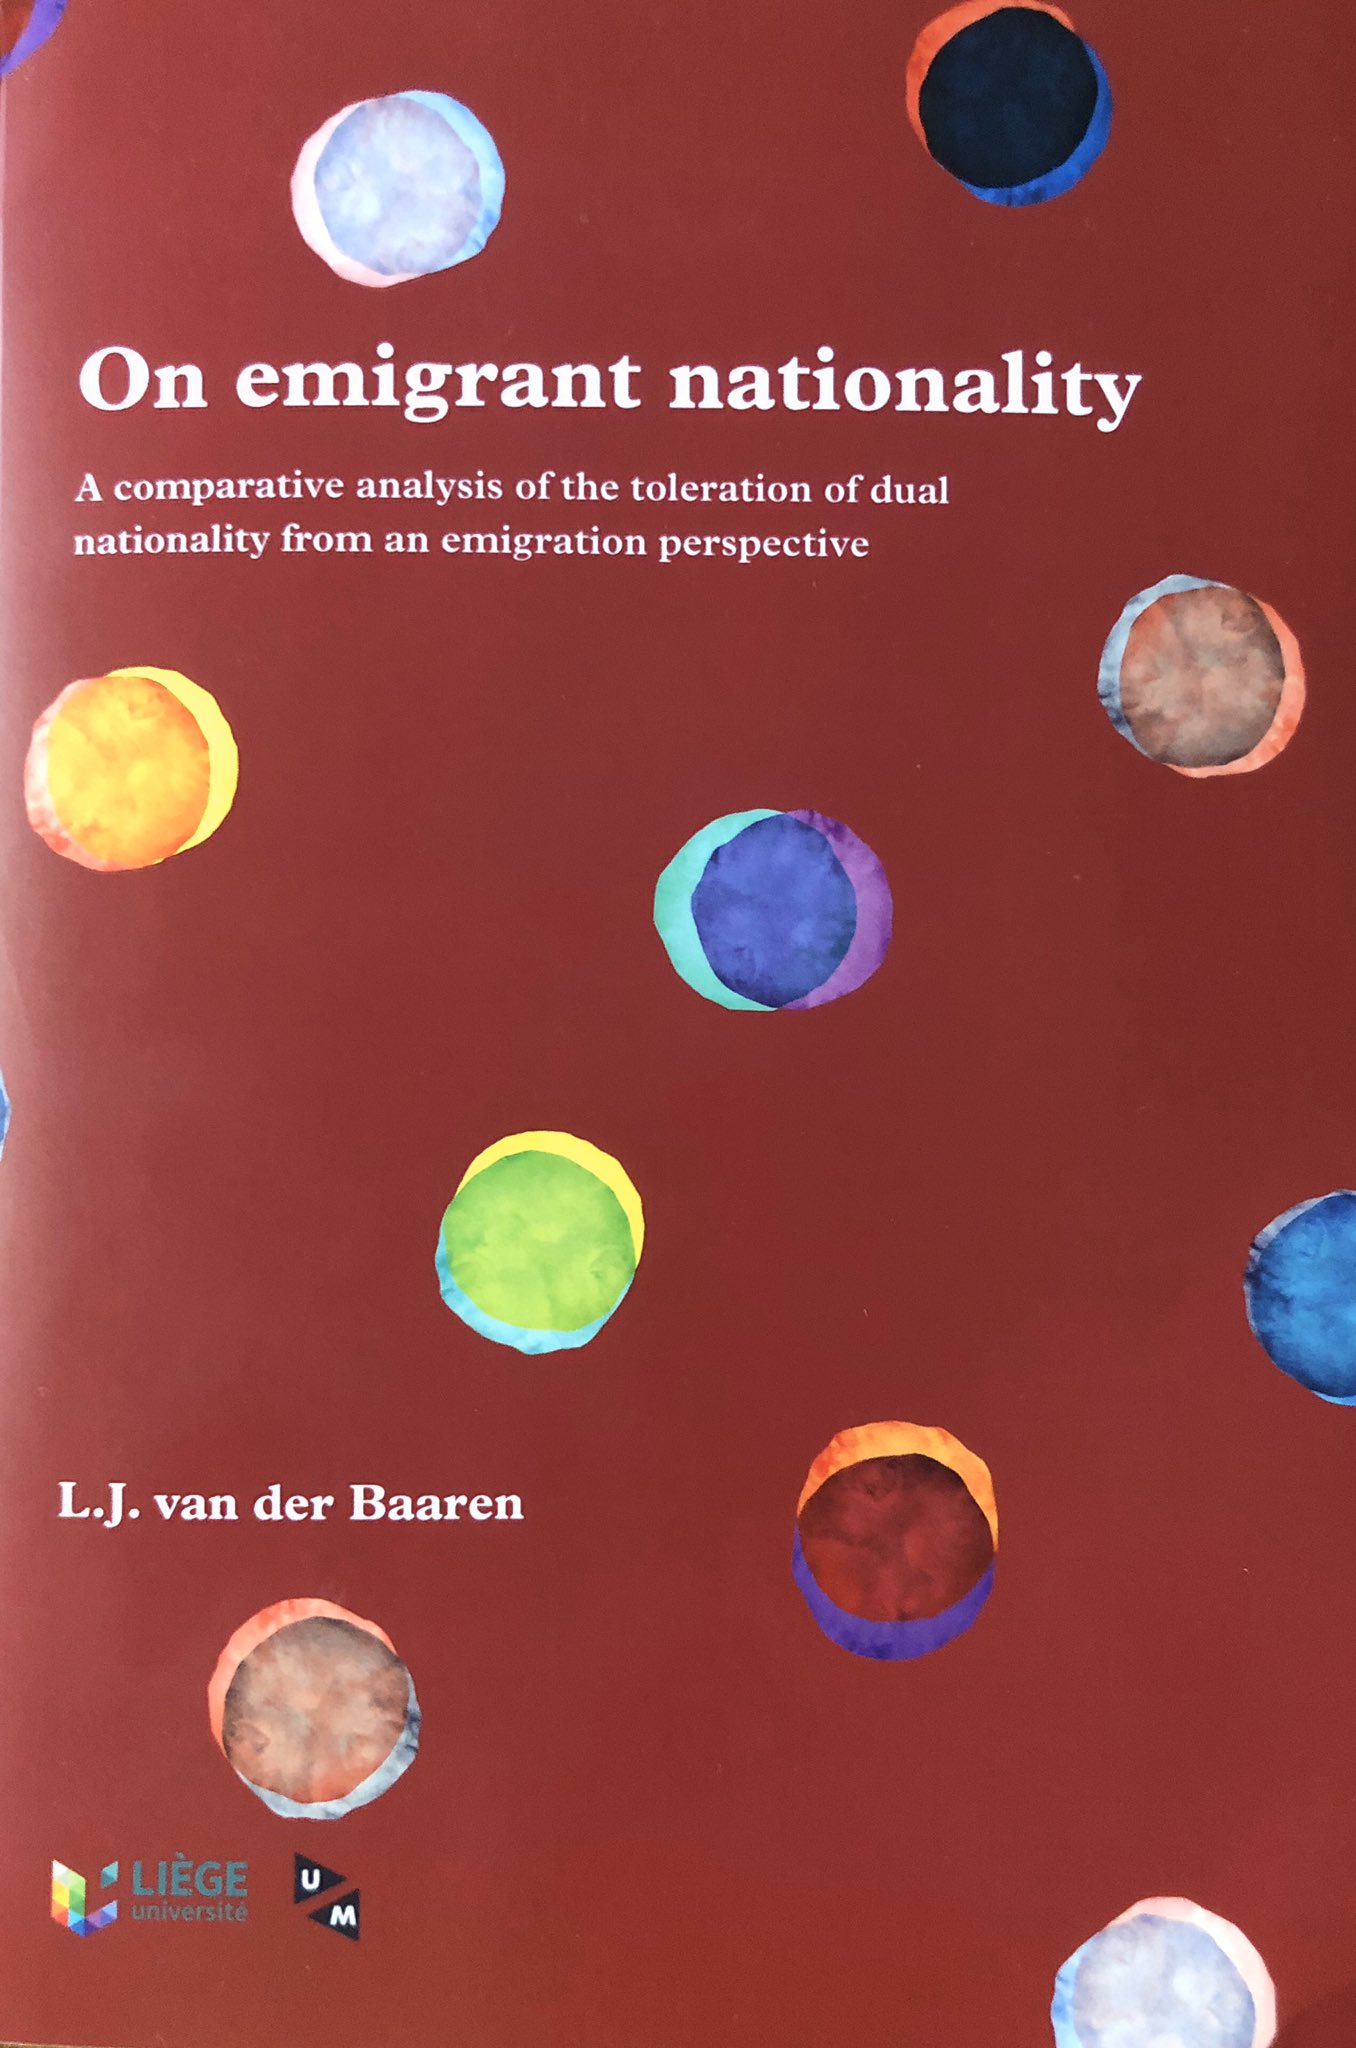 Law_Luuk van der Baaren on Emigrant Nationality_PhD defence